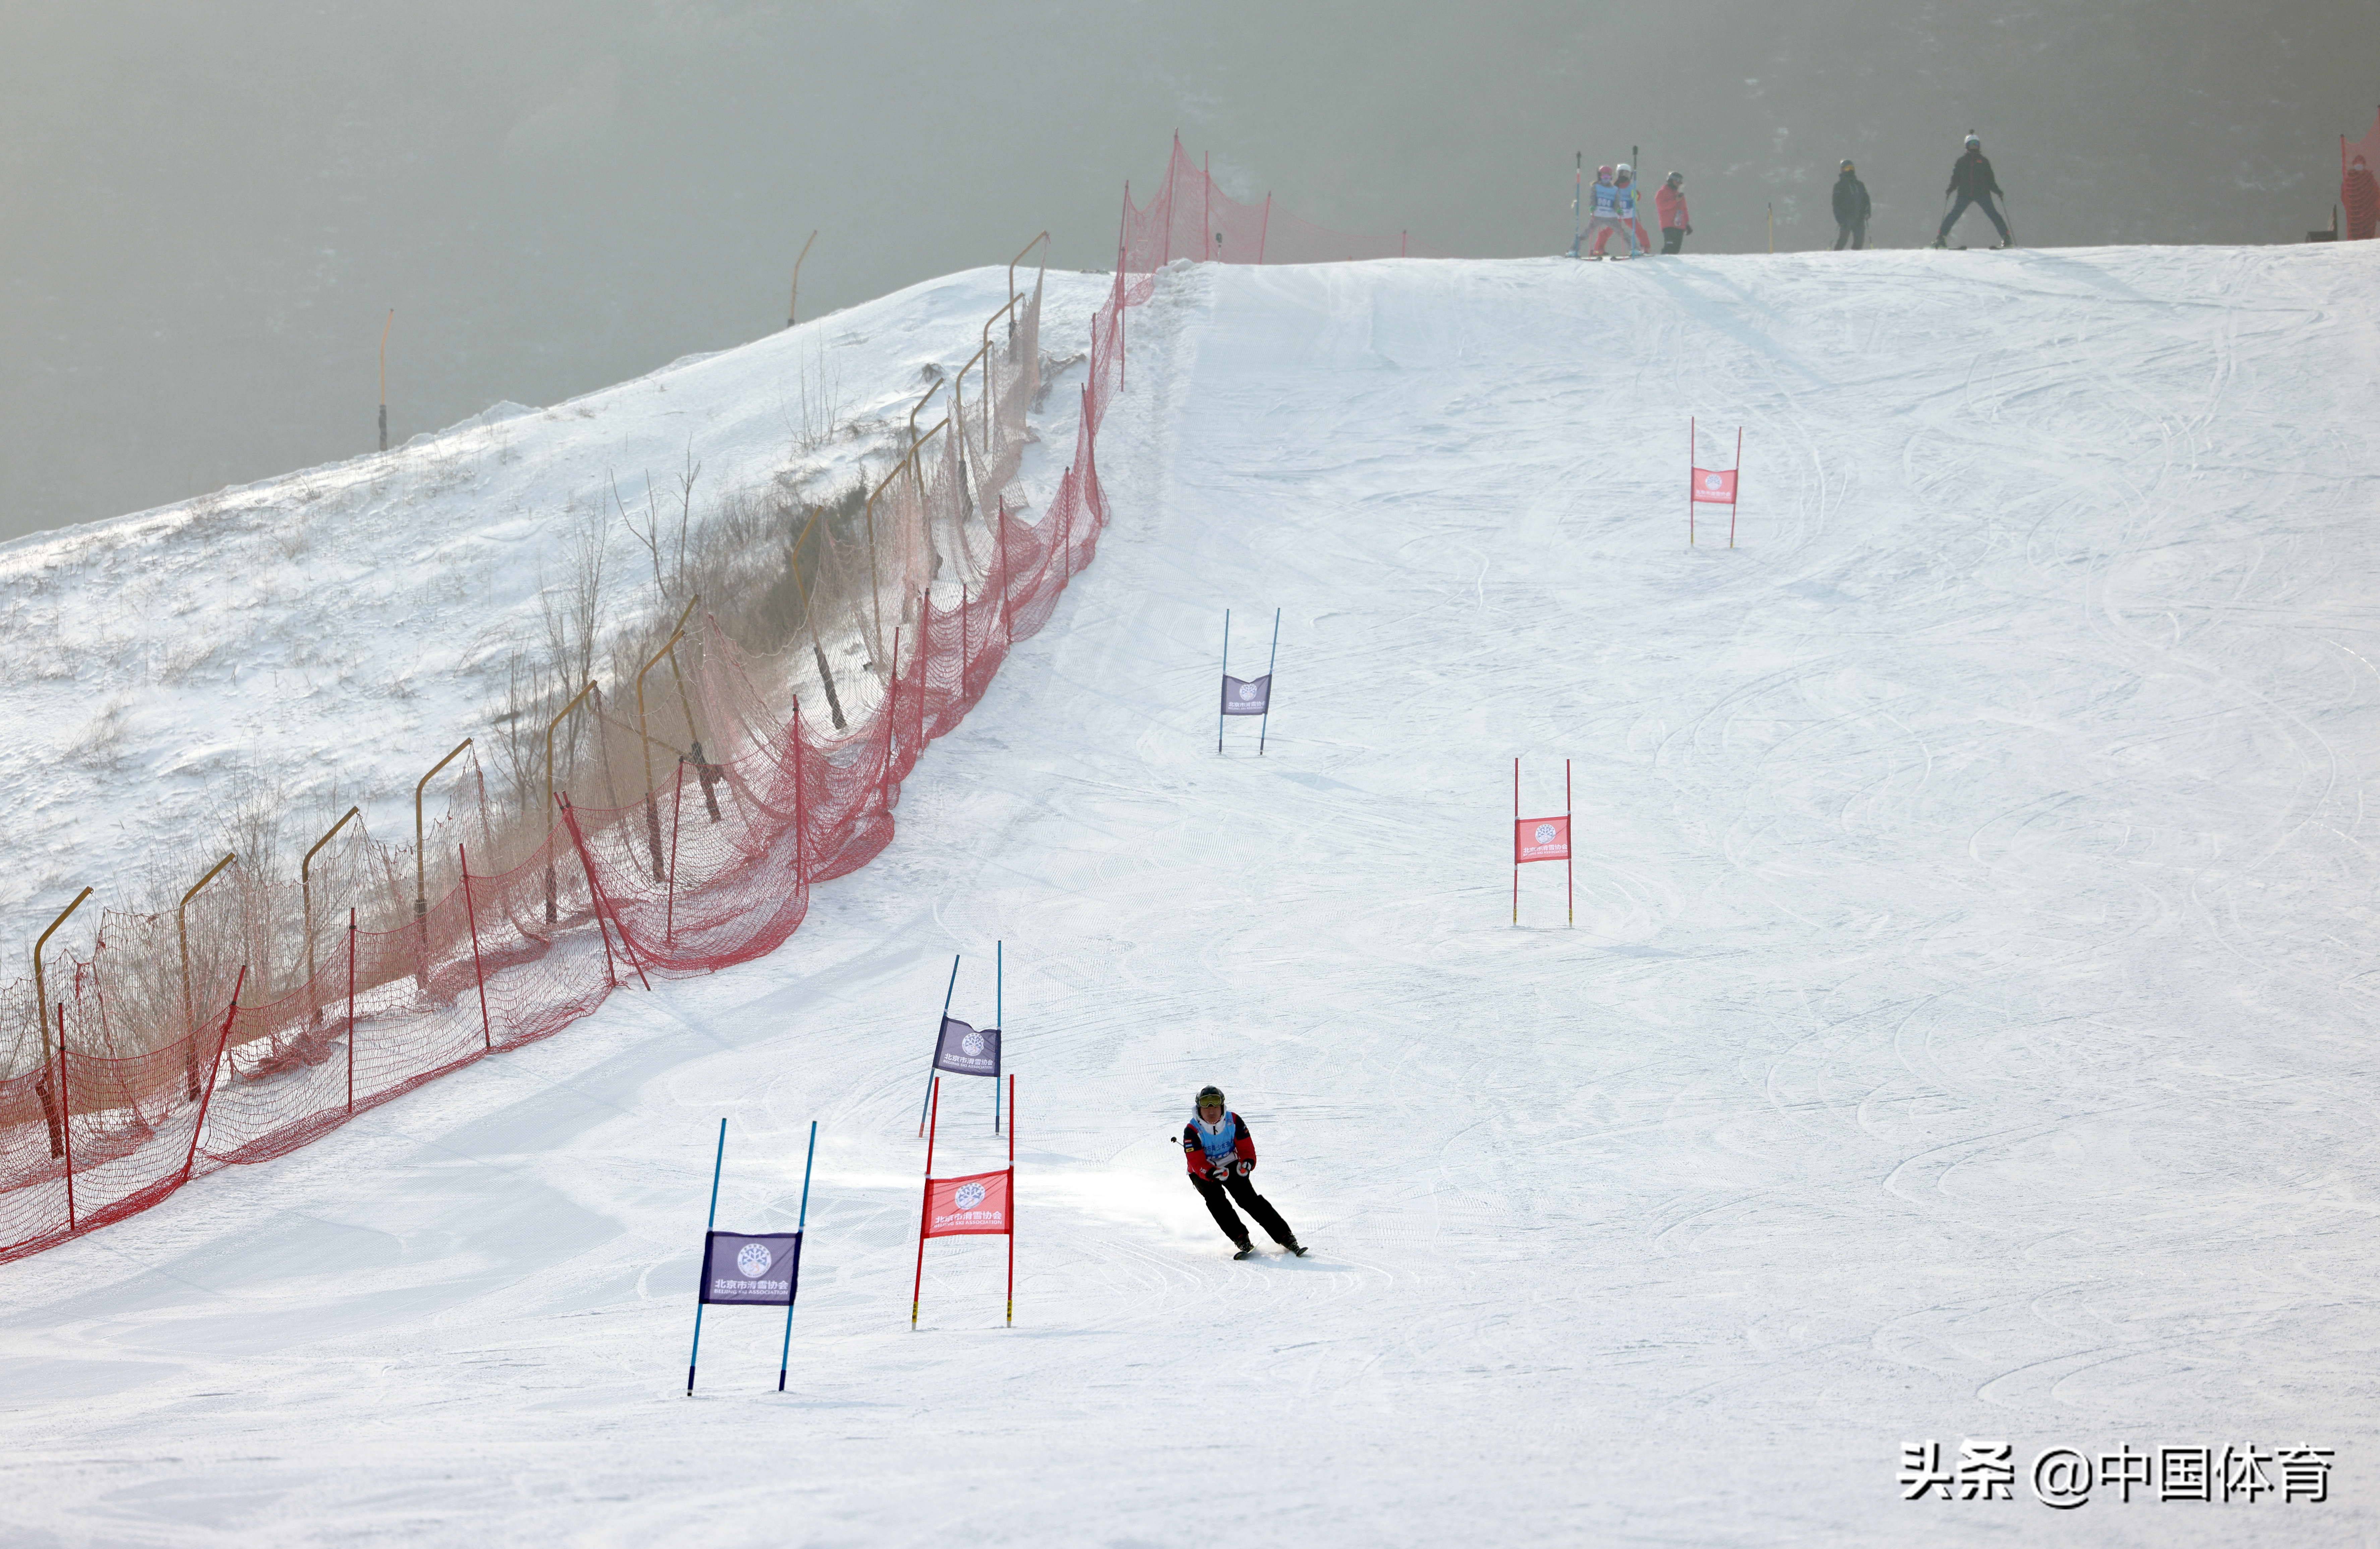 阳光滑雪场雪道图片